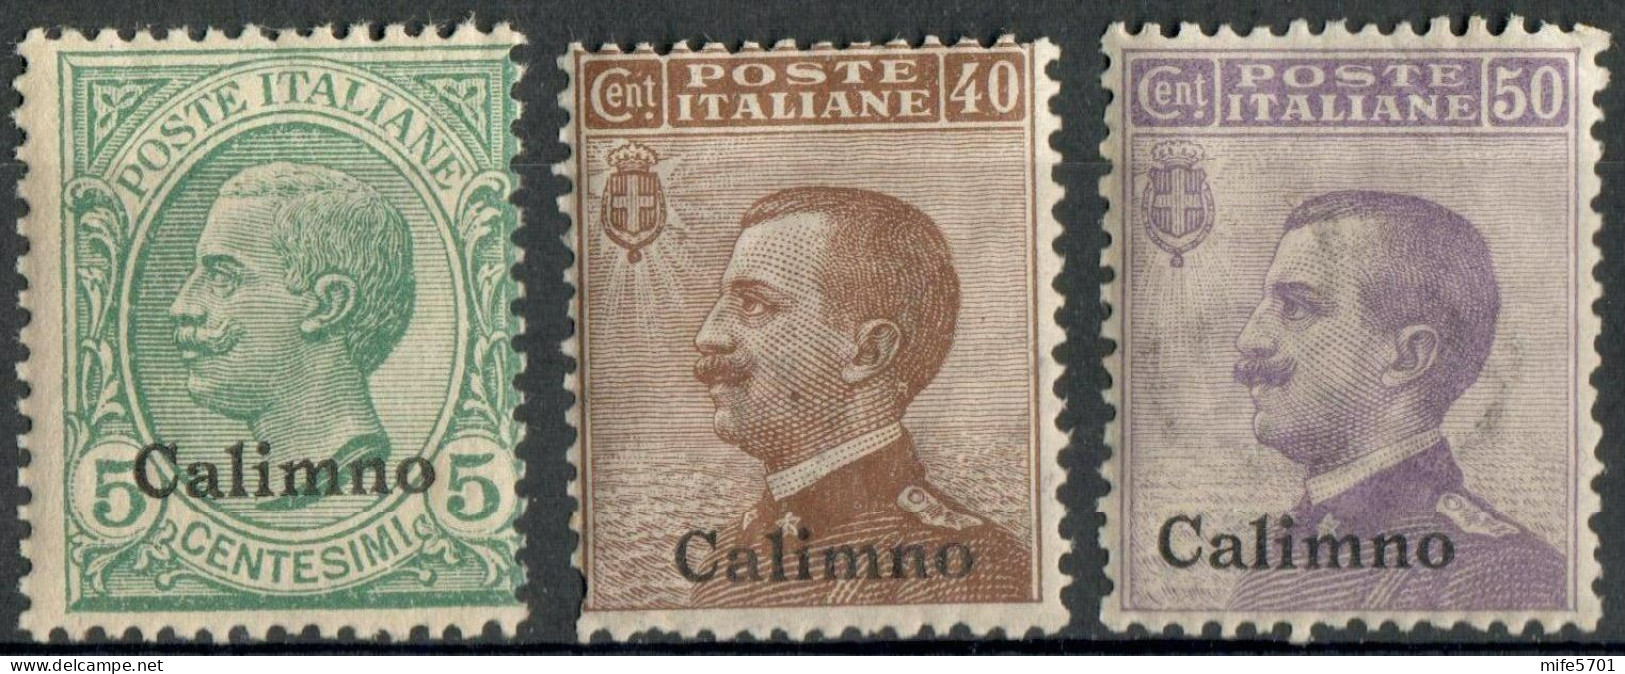 REGNO COLONIE EGEO CALINO 1916 TRE FRANCOBOLLI C. 5 / C. 40 / C. 50 SOPRASTAMPATI 'CALIMNO' NUOVI MNH ** SASSONE 2-6/7 - Egeo (Calino)